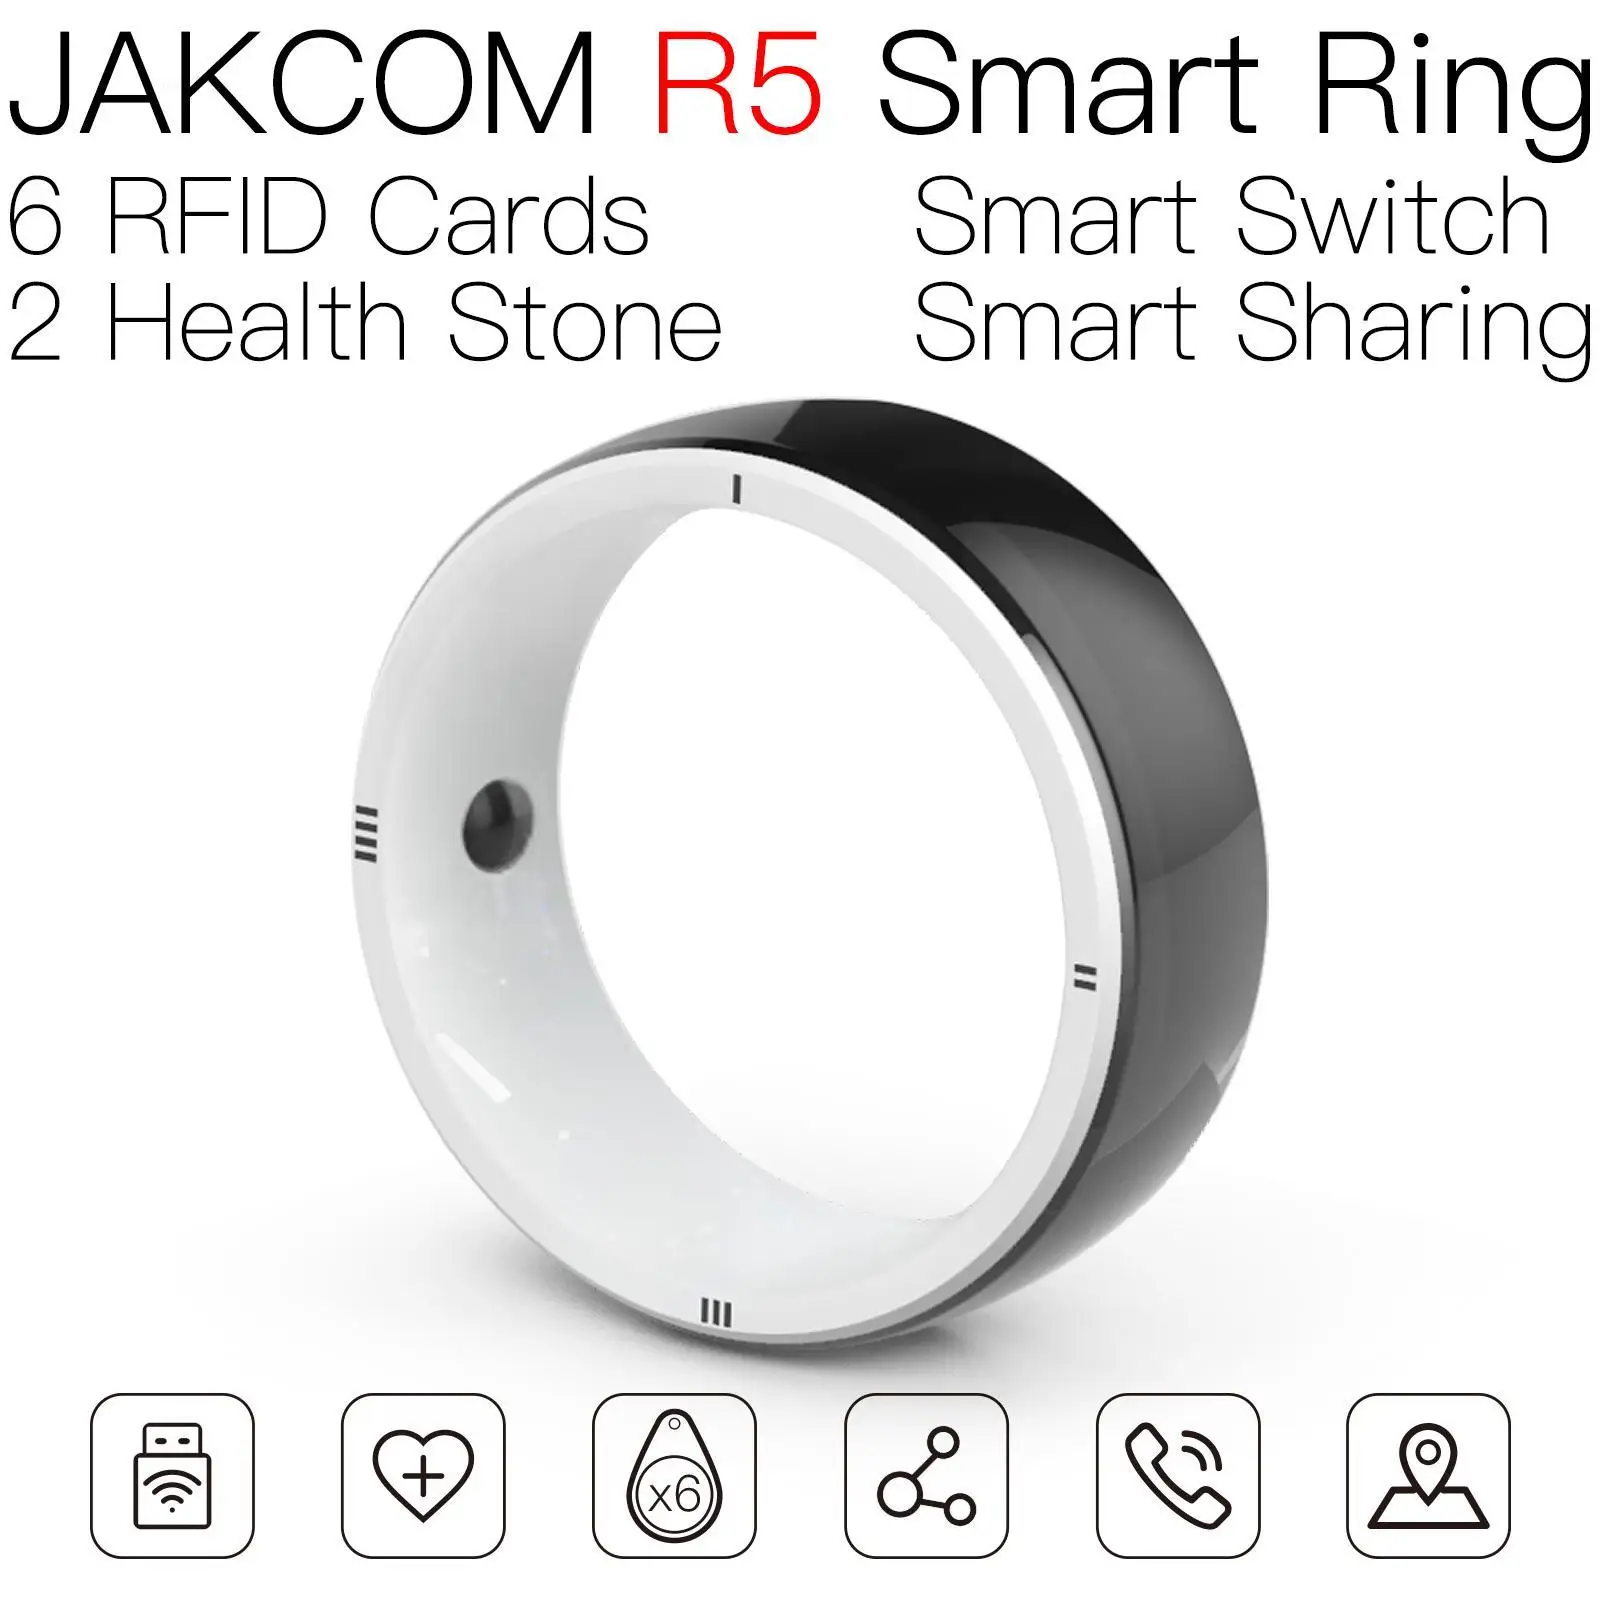 

JAKCOM R5 Smart Ring better than rfid antenna tag mhz wood business card uhf rf autocollant 20pcs reader fat bike disc t5577